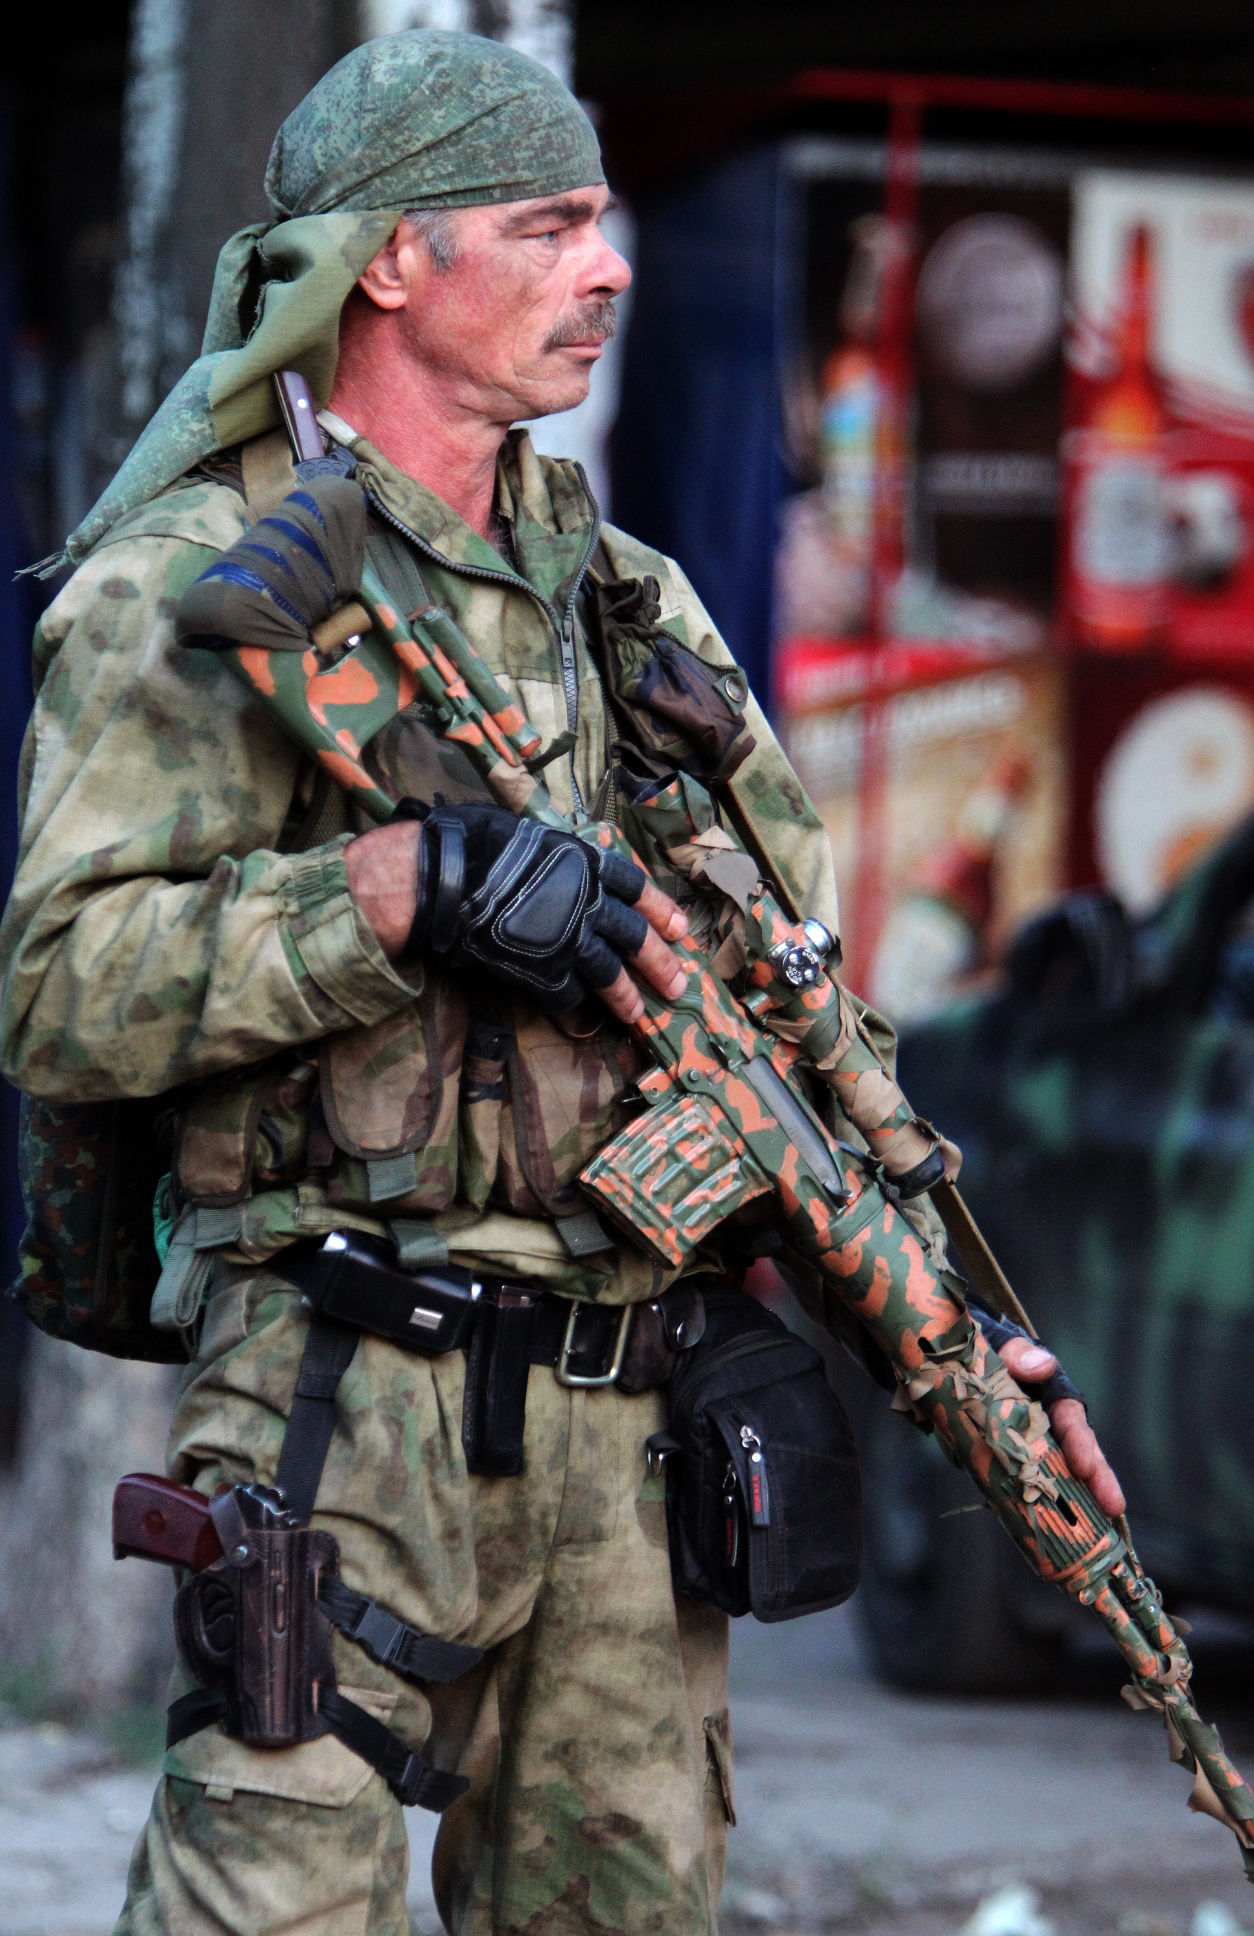 Снайпер ДНР - фото Игоря Коваленко